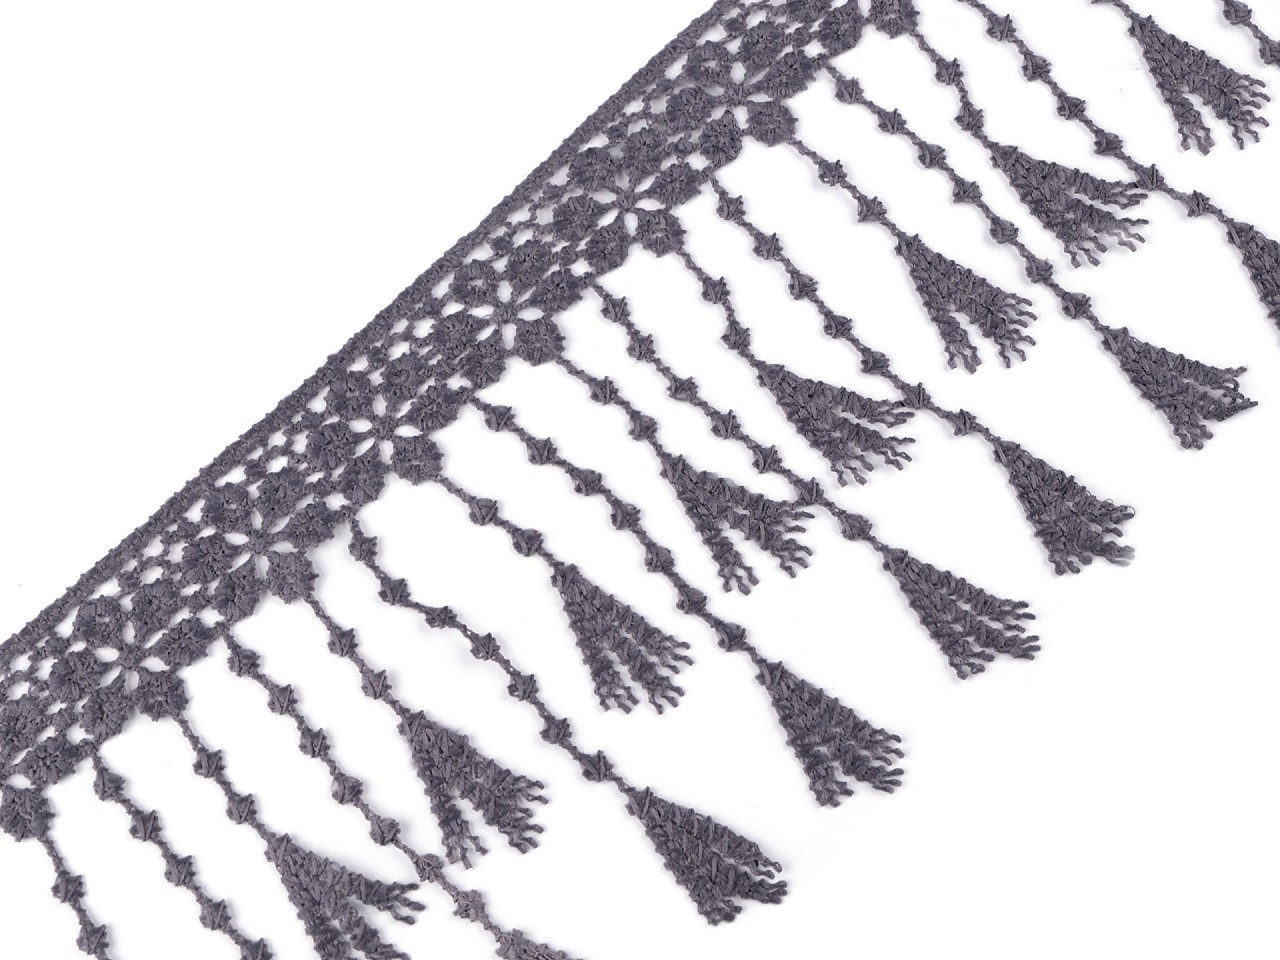 Vzdušná krajka s třásněmi šíře 12 cm, barva šedá tmavá